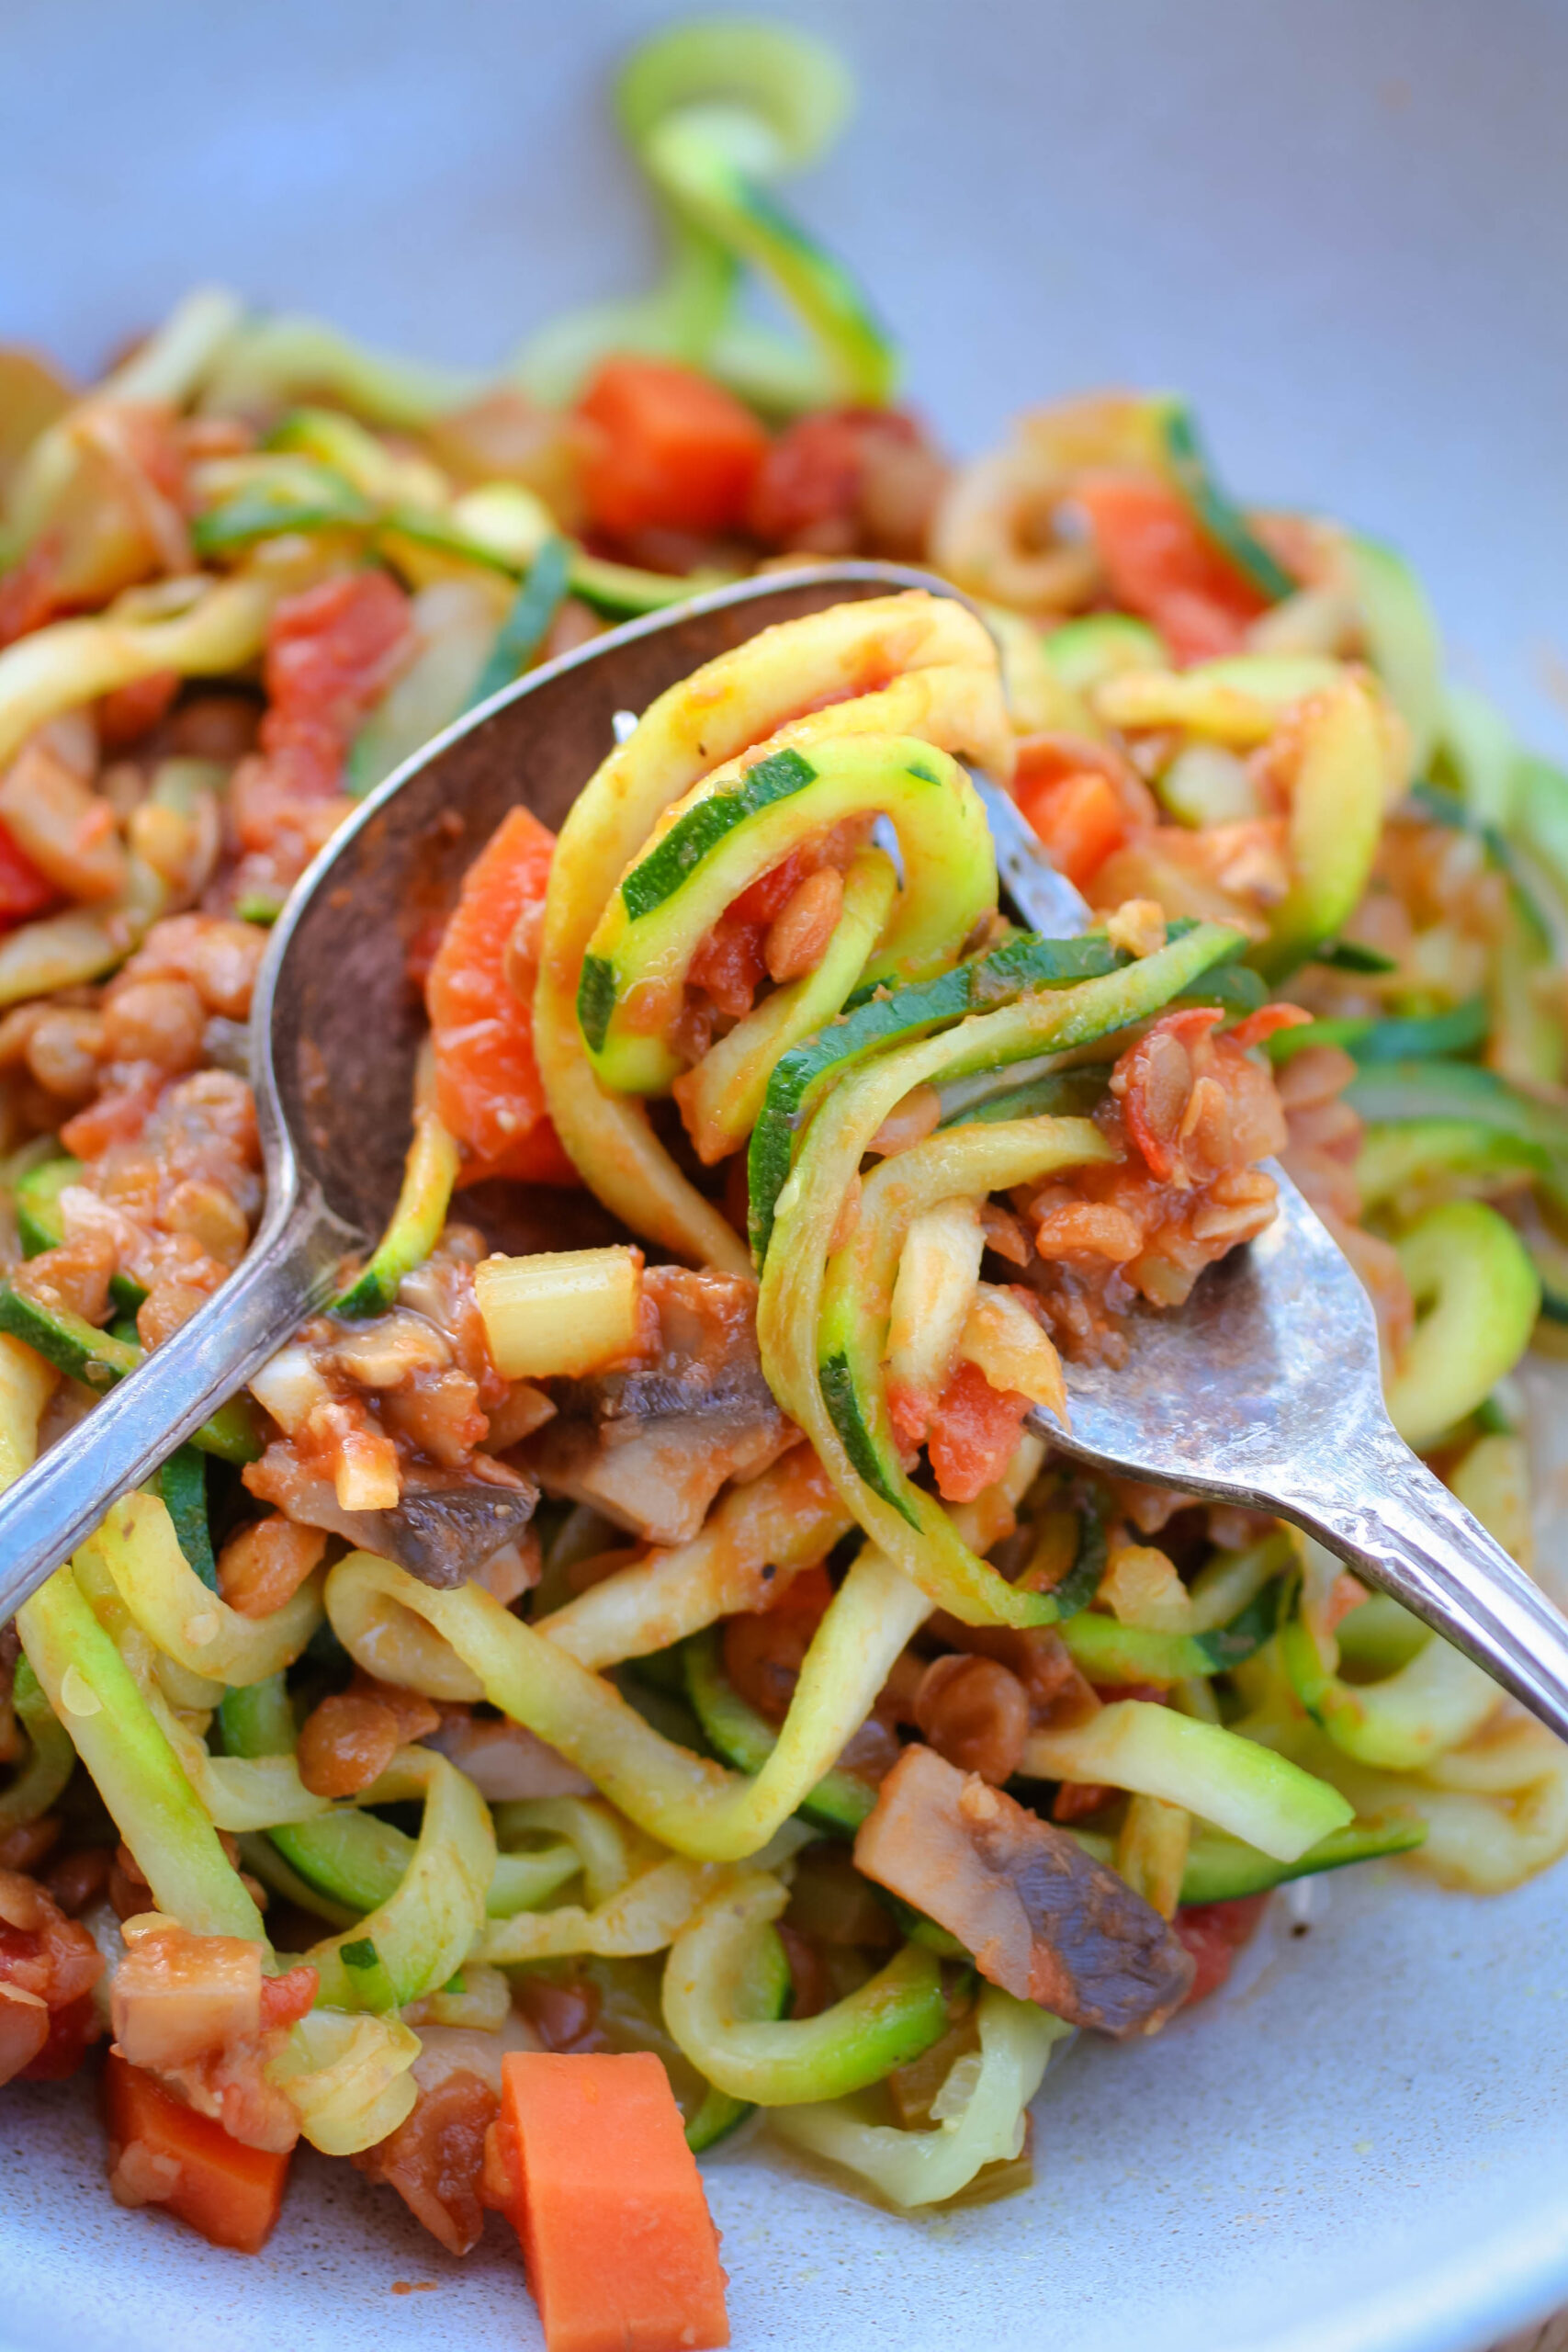 Vegetable-Lentil Bolognese with Zucchini Noodles